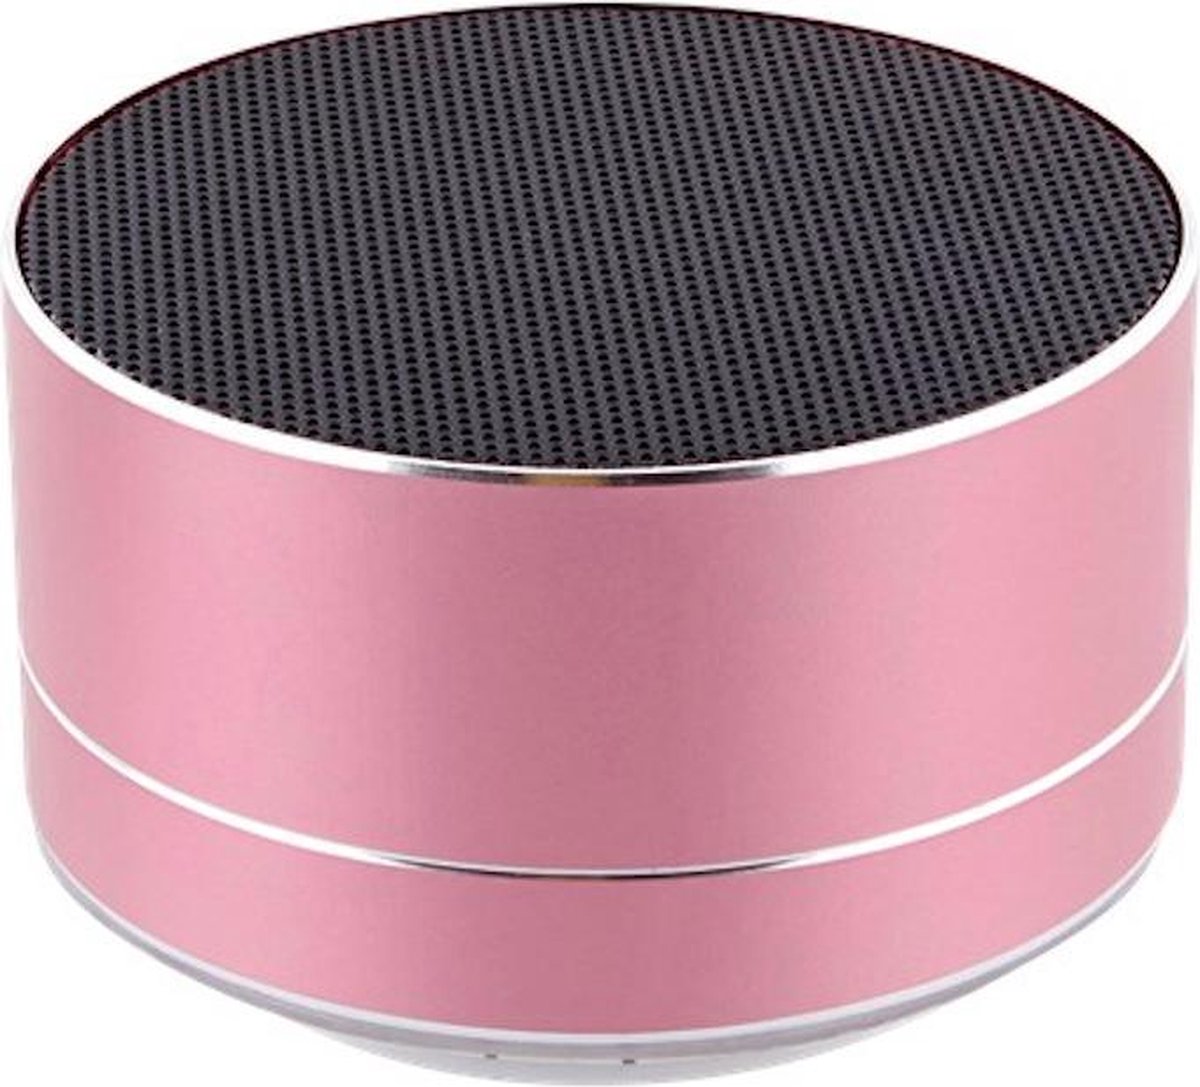 S&C - Bluetooth speaker roze klein mini draadloze speaker muziek audio